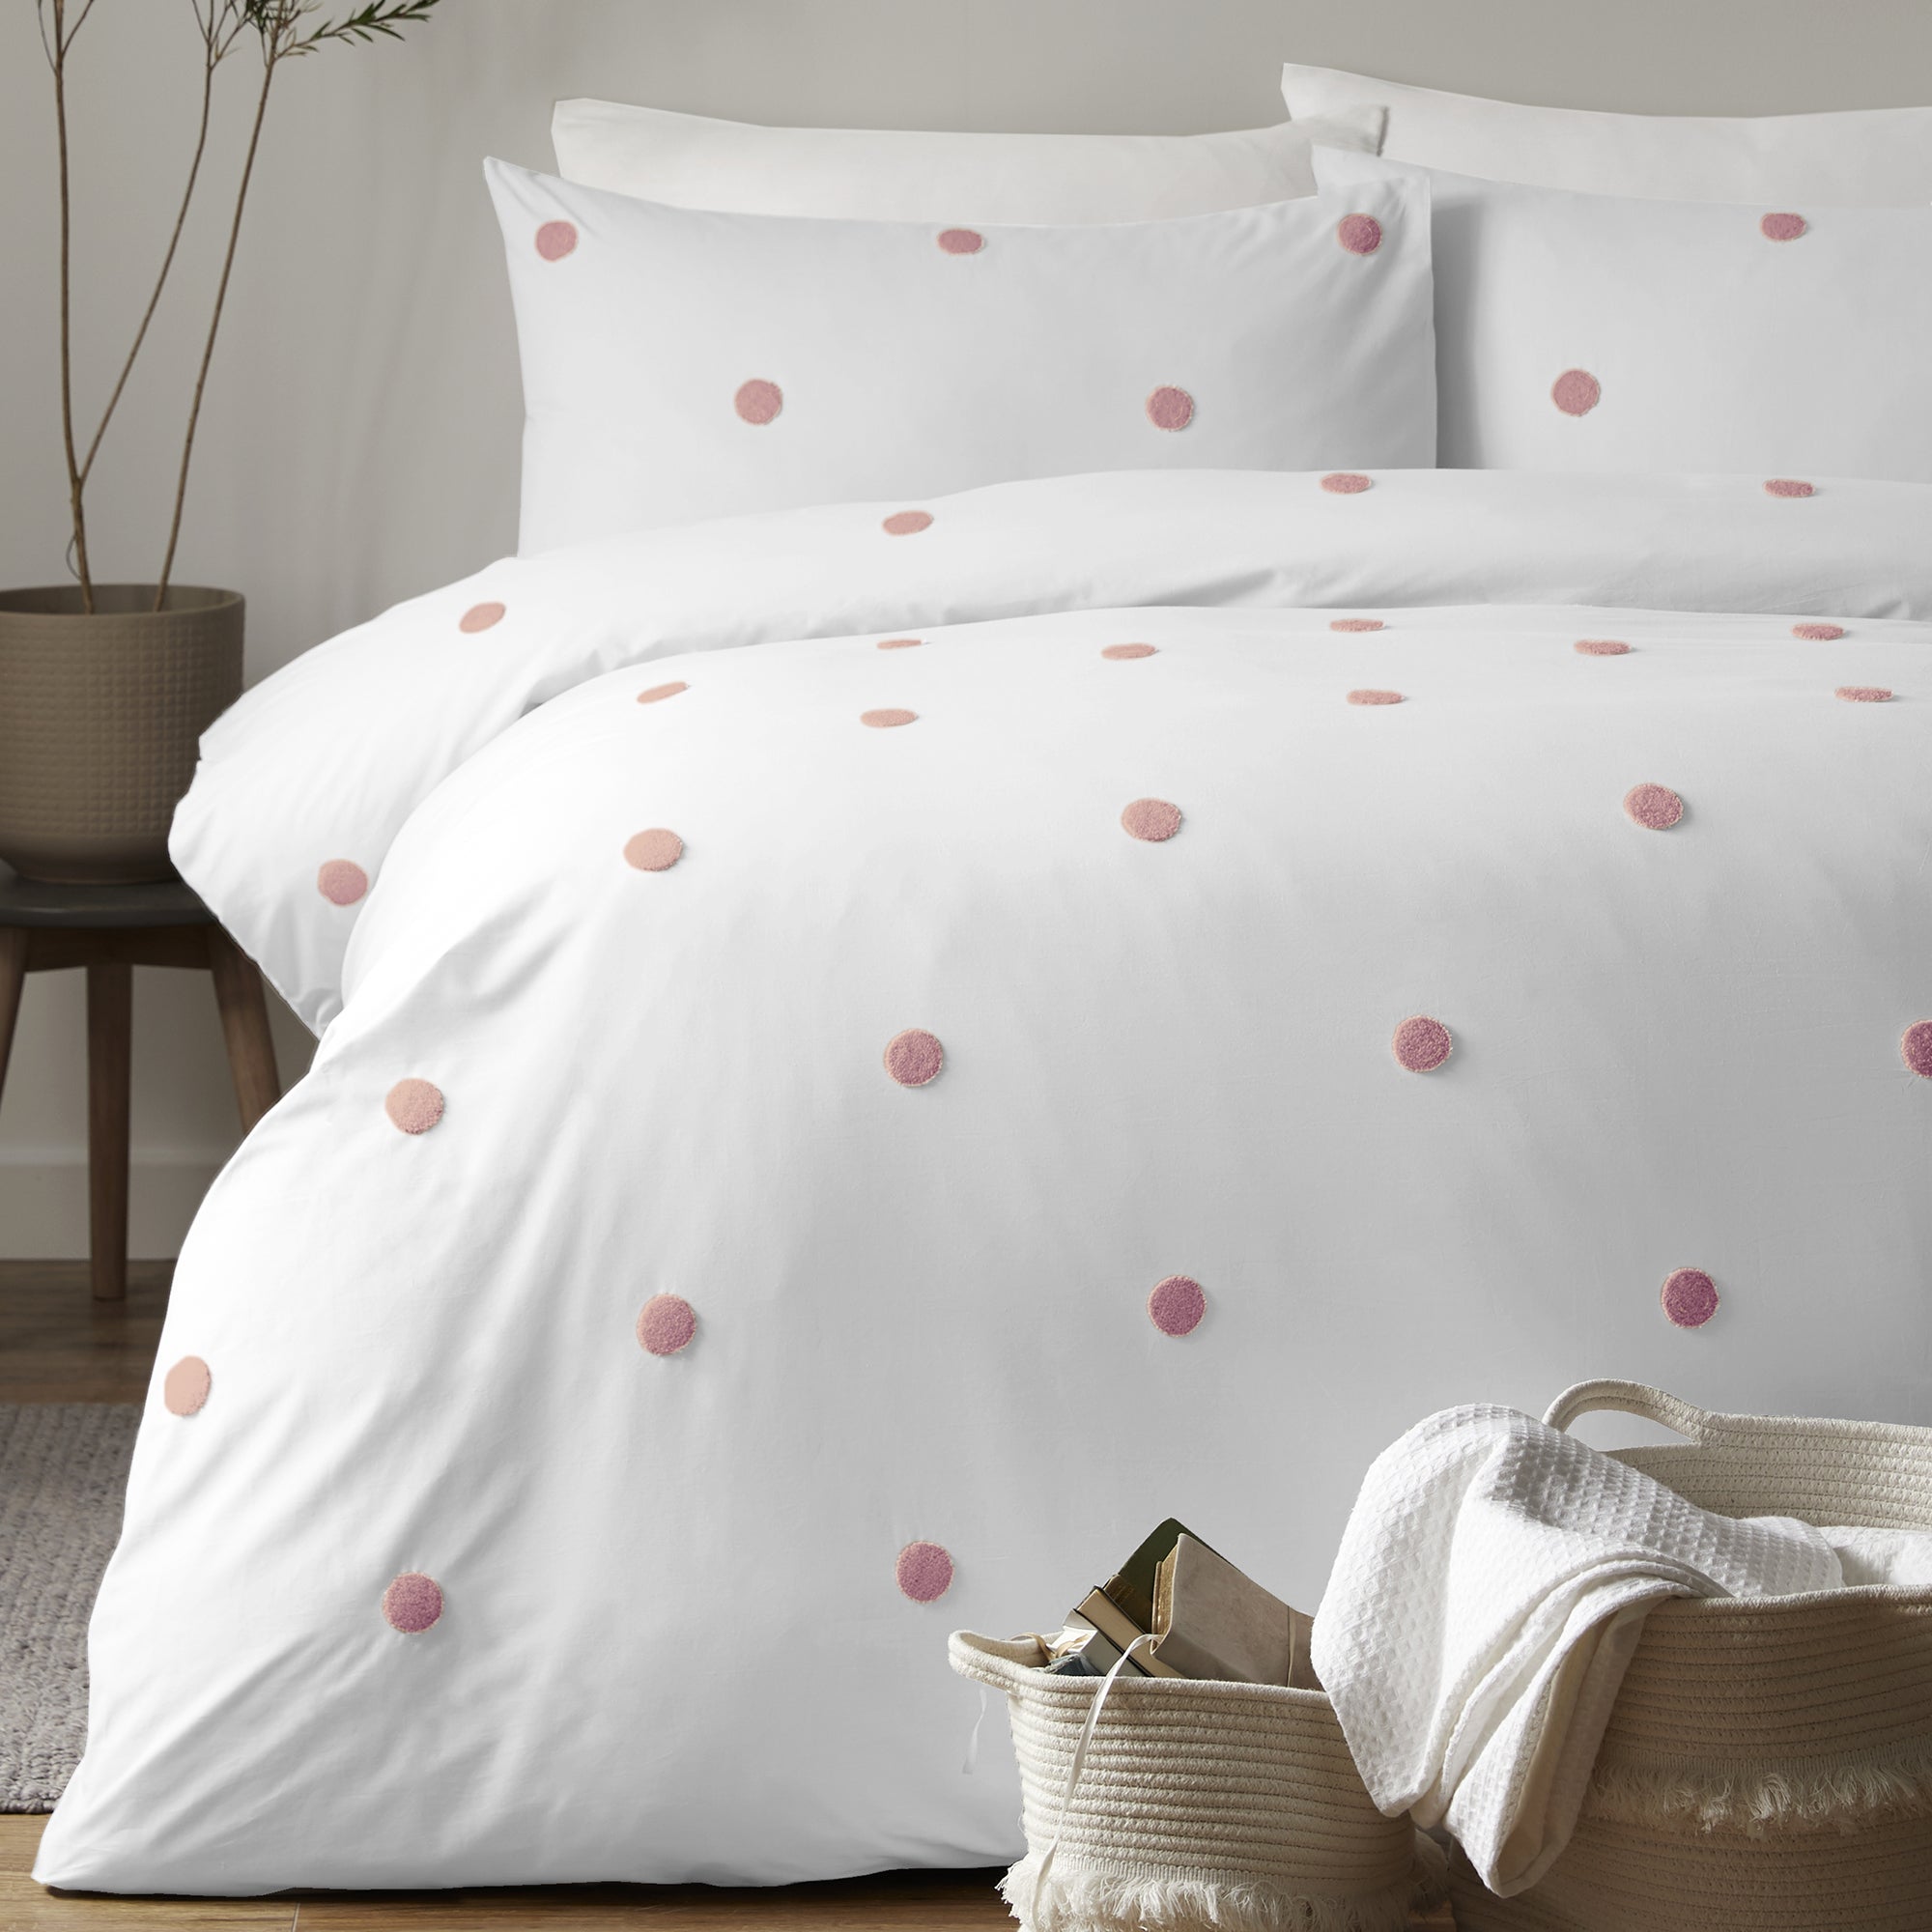 Dot Garden Duvet Cover and Pillowcase Set Pink white